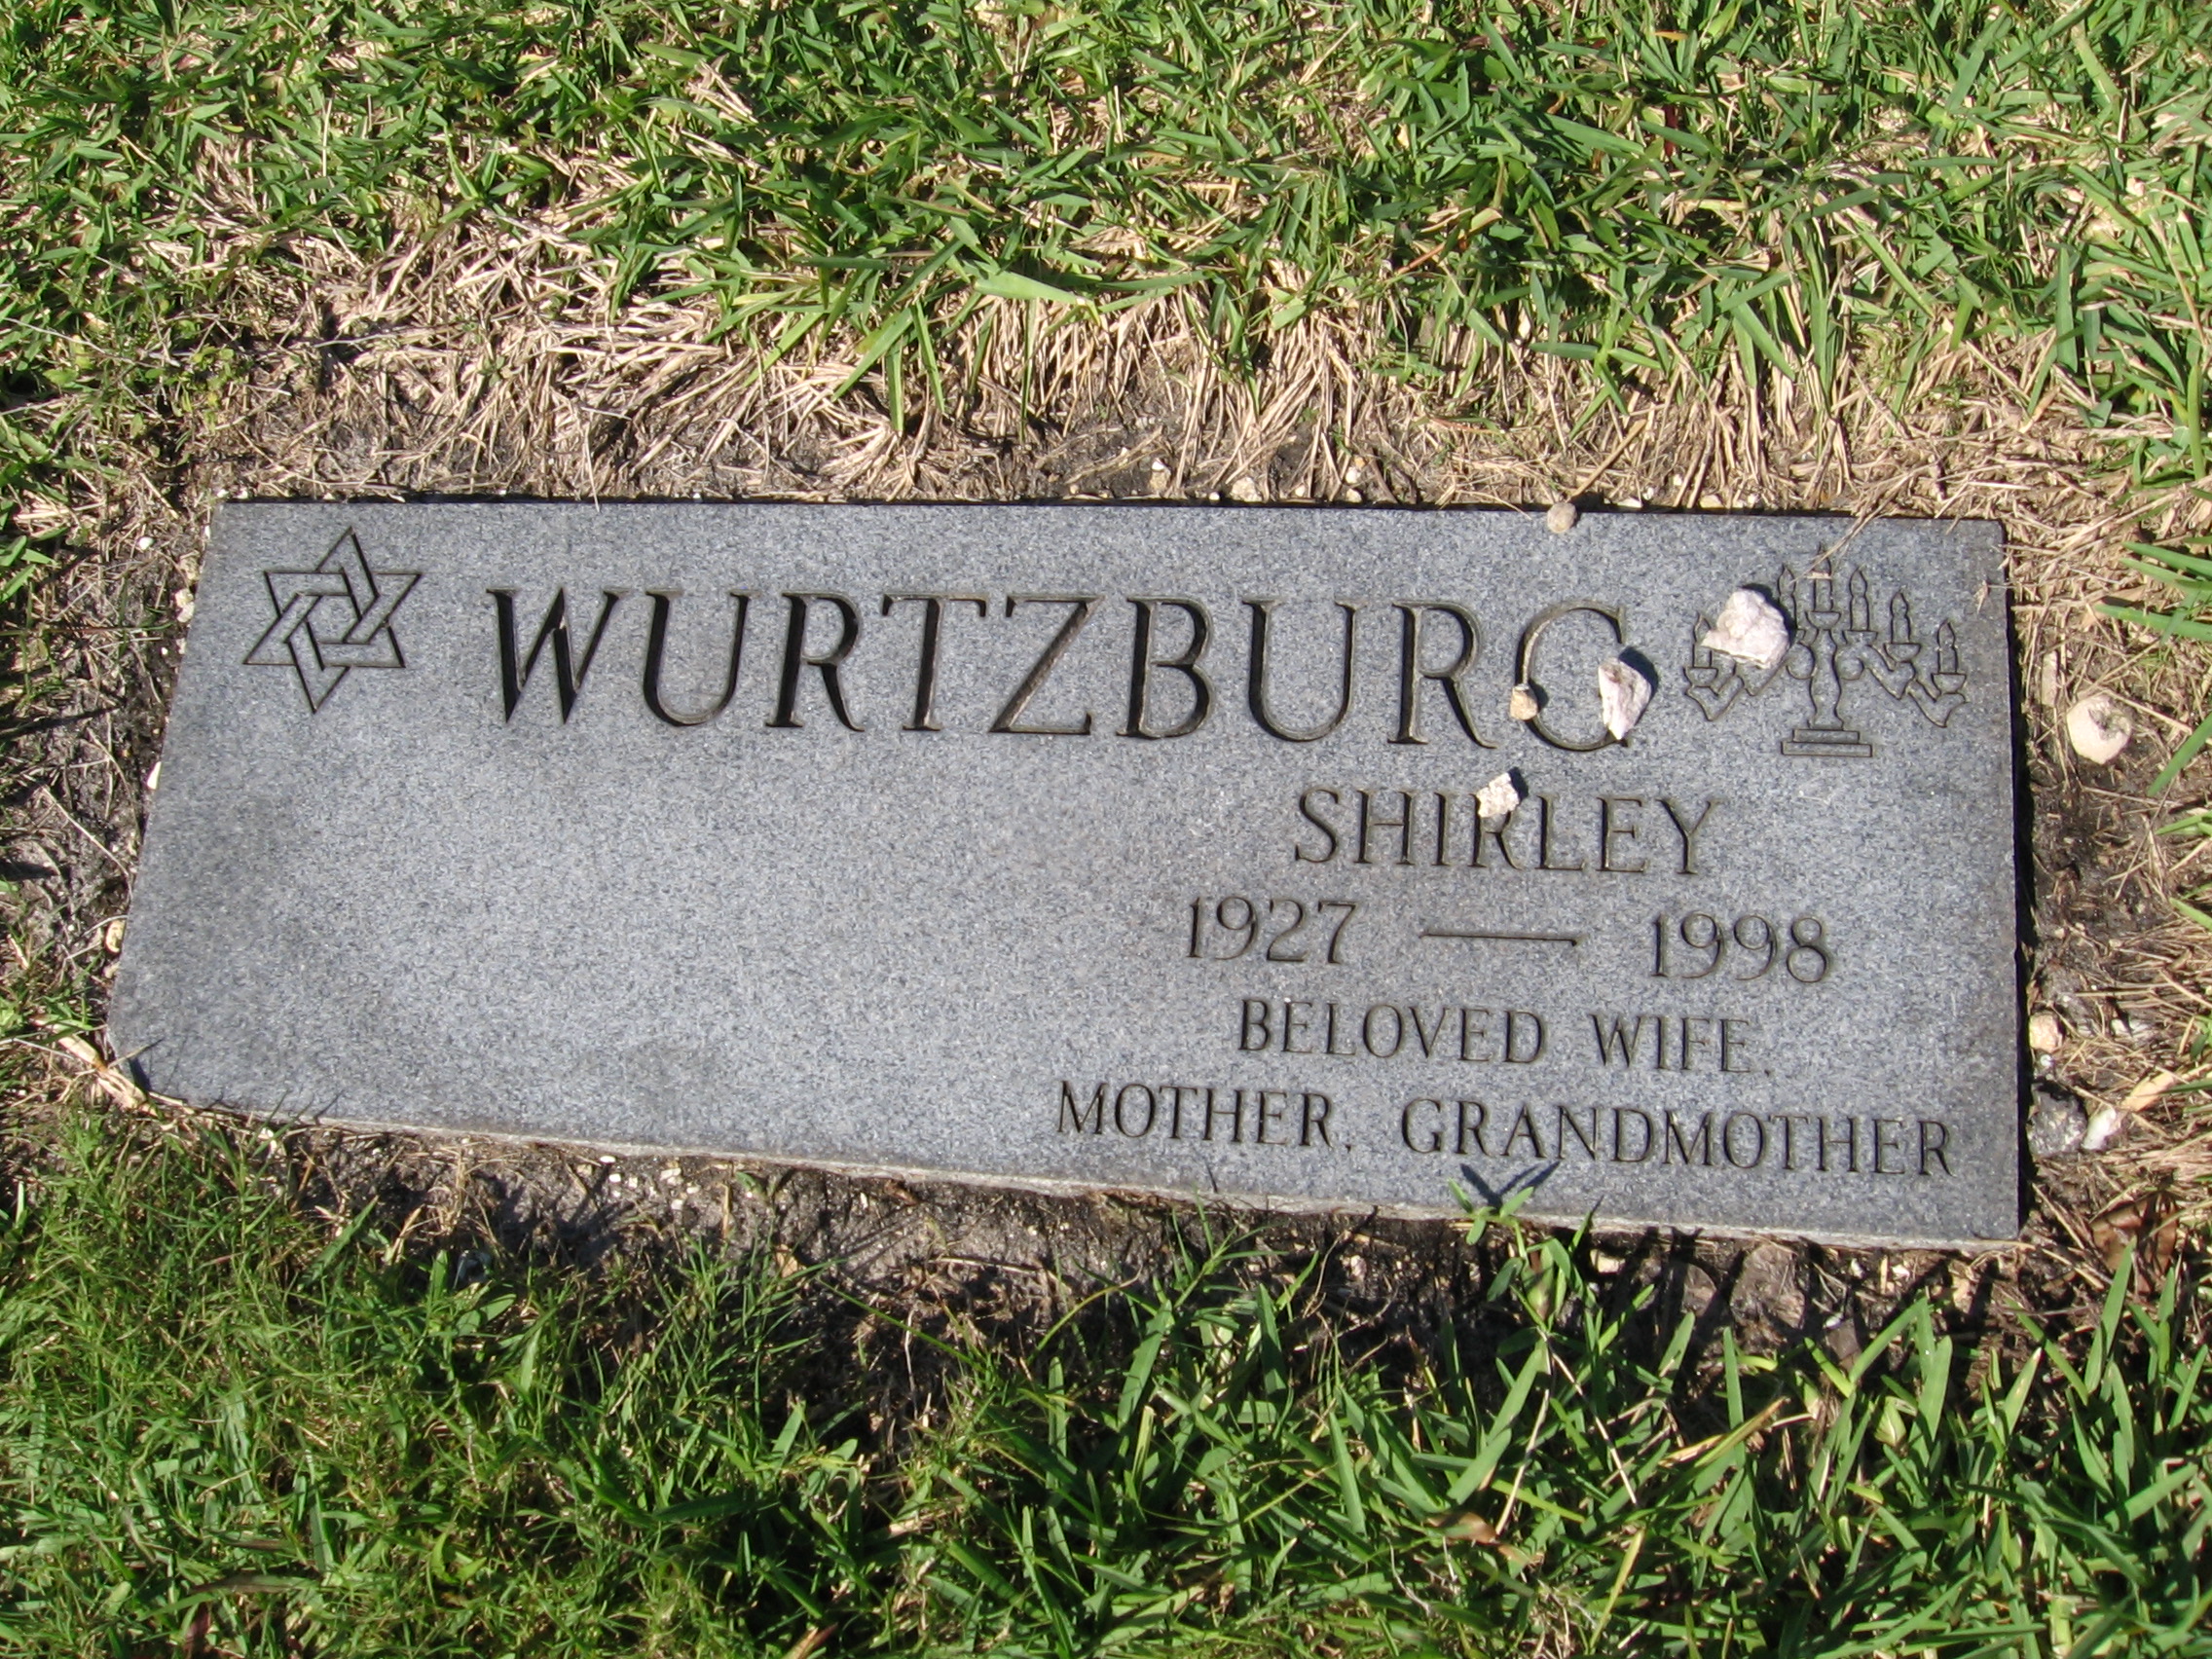 Shirley Wurtzburg